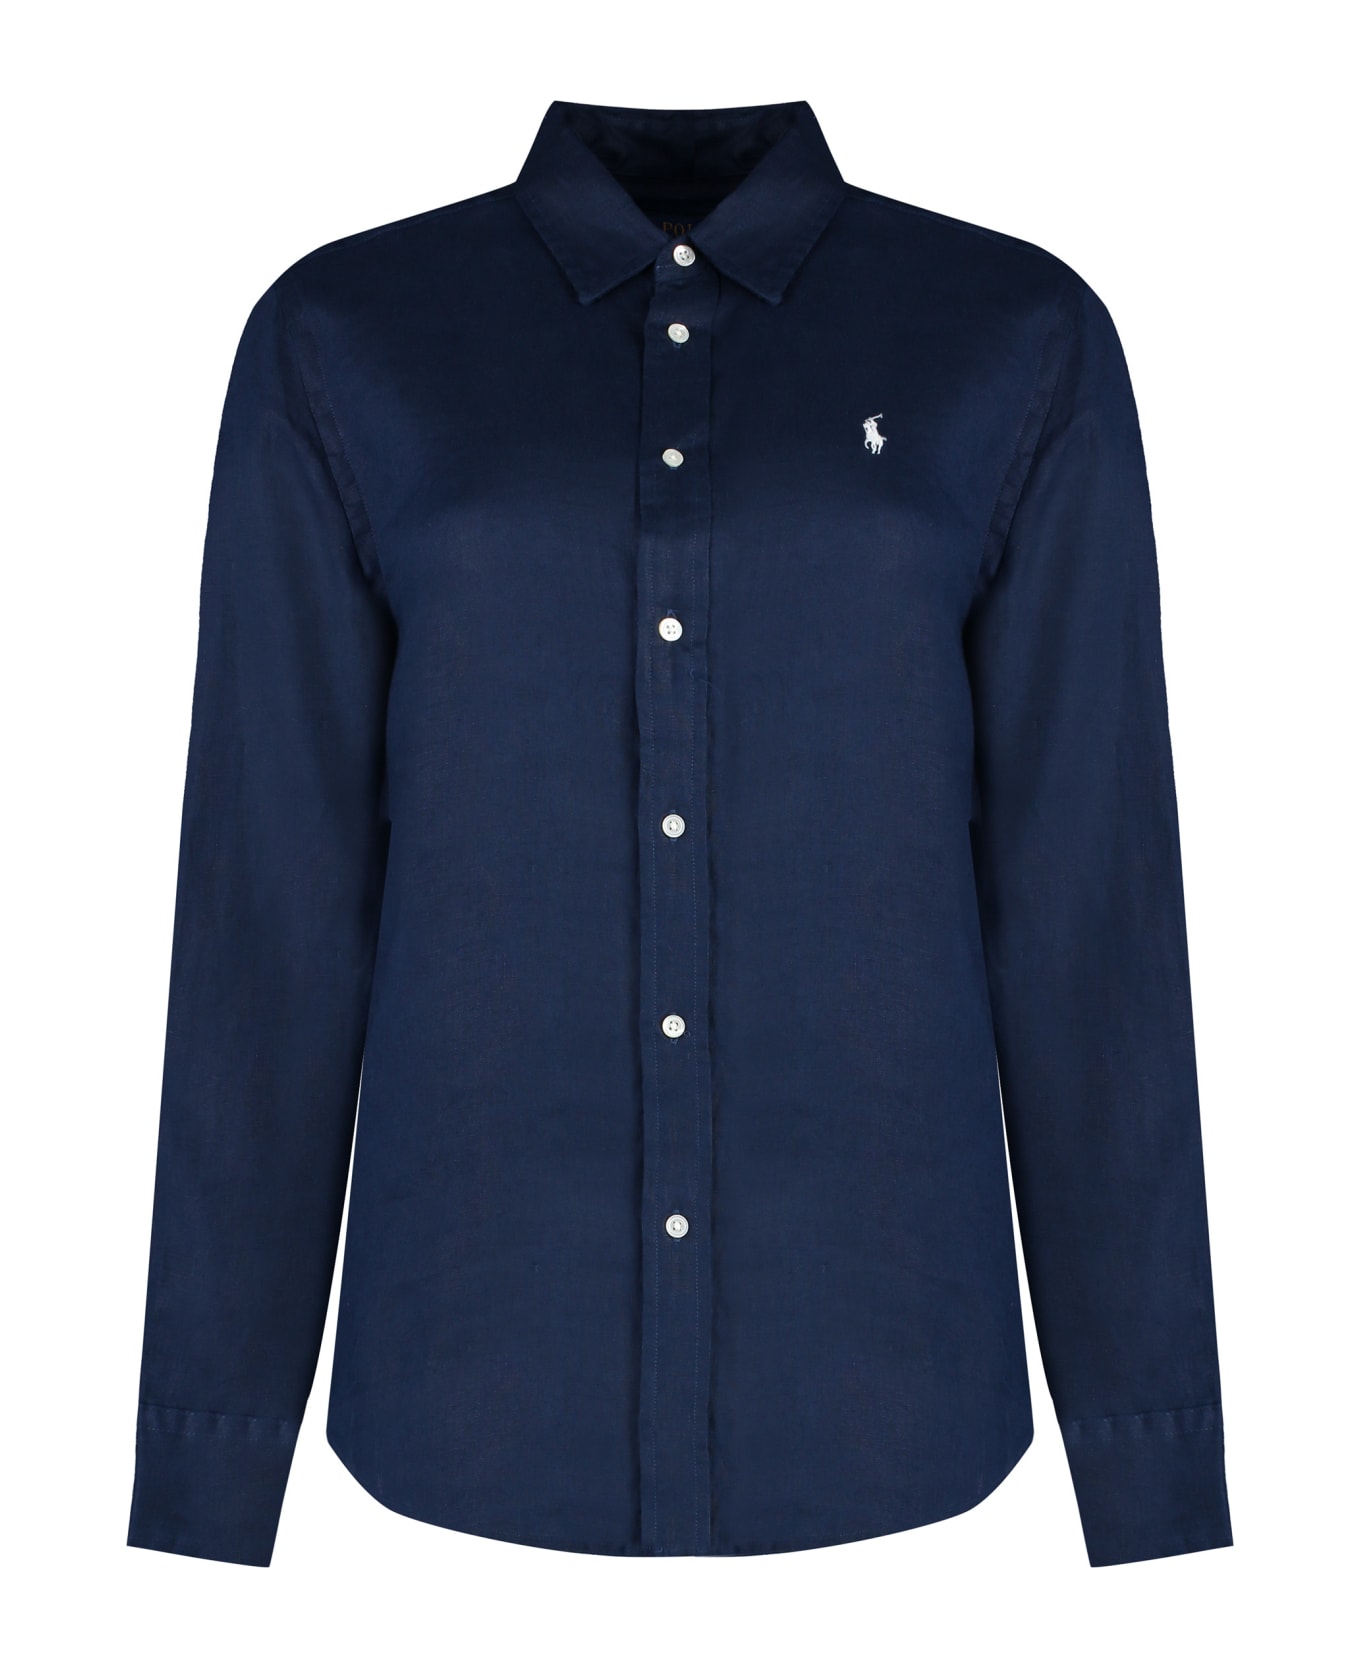 Ralph Lauren Linen Shirt - Newport Navy シャツ